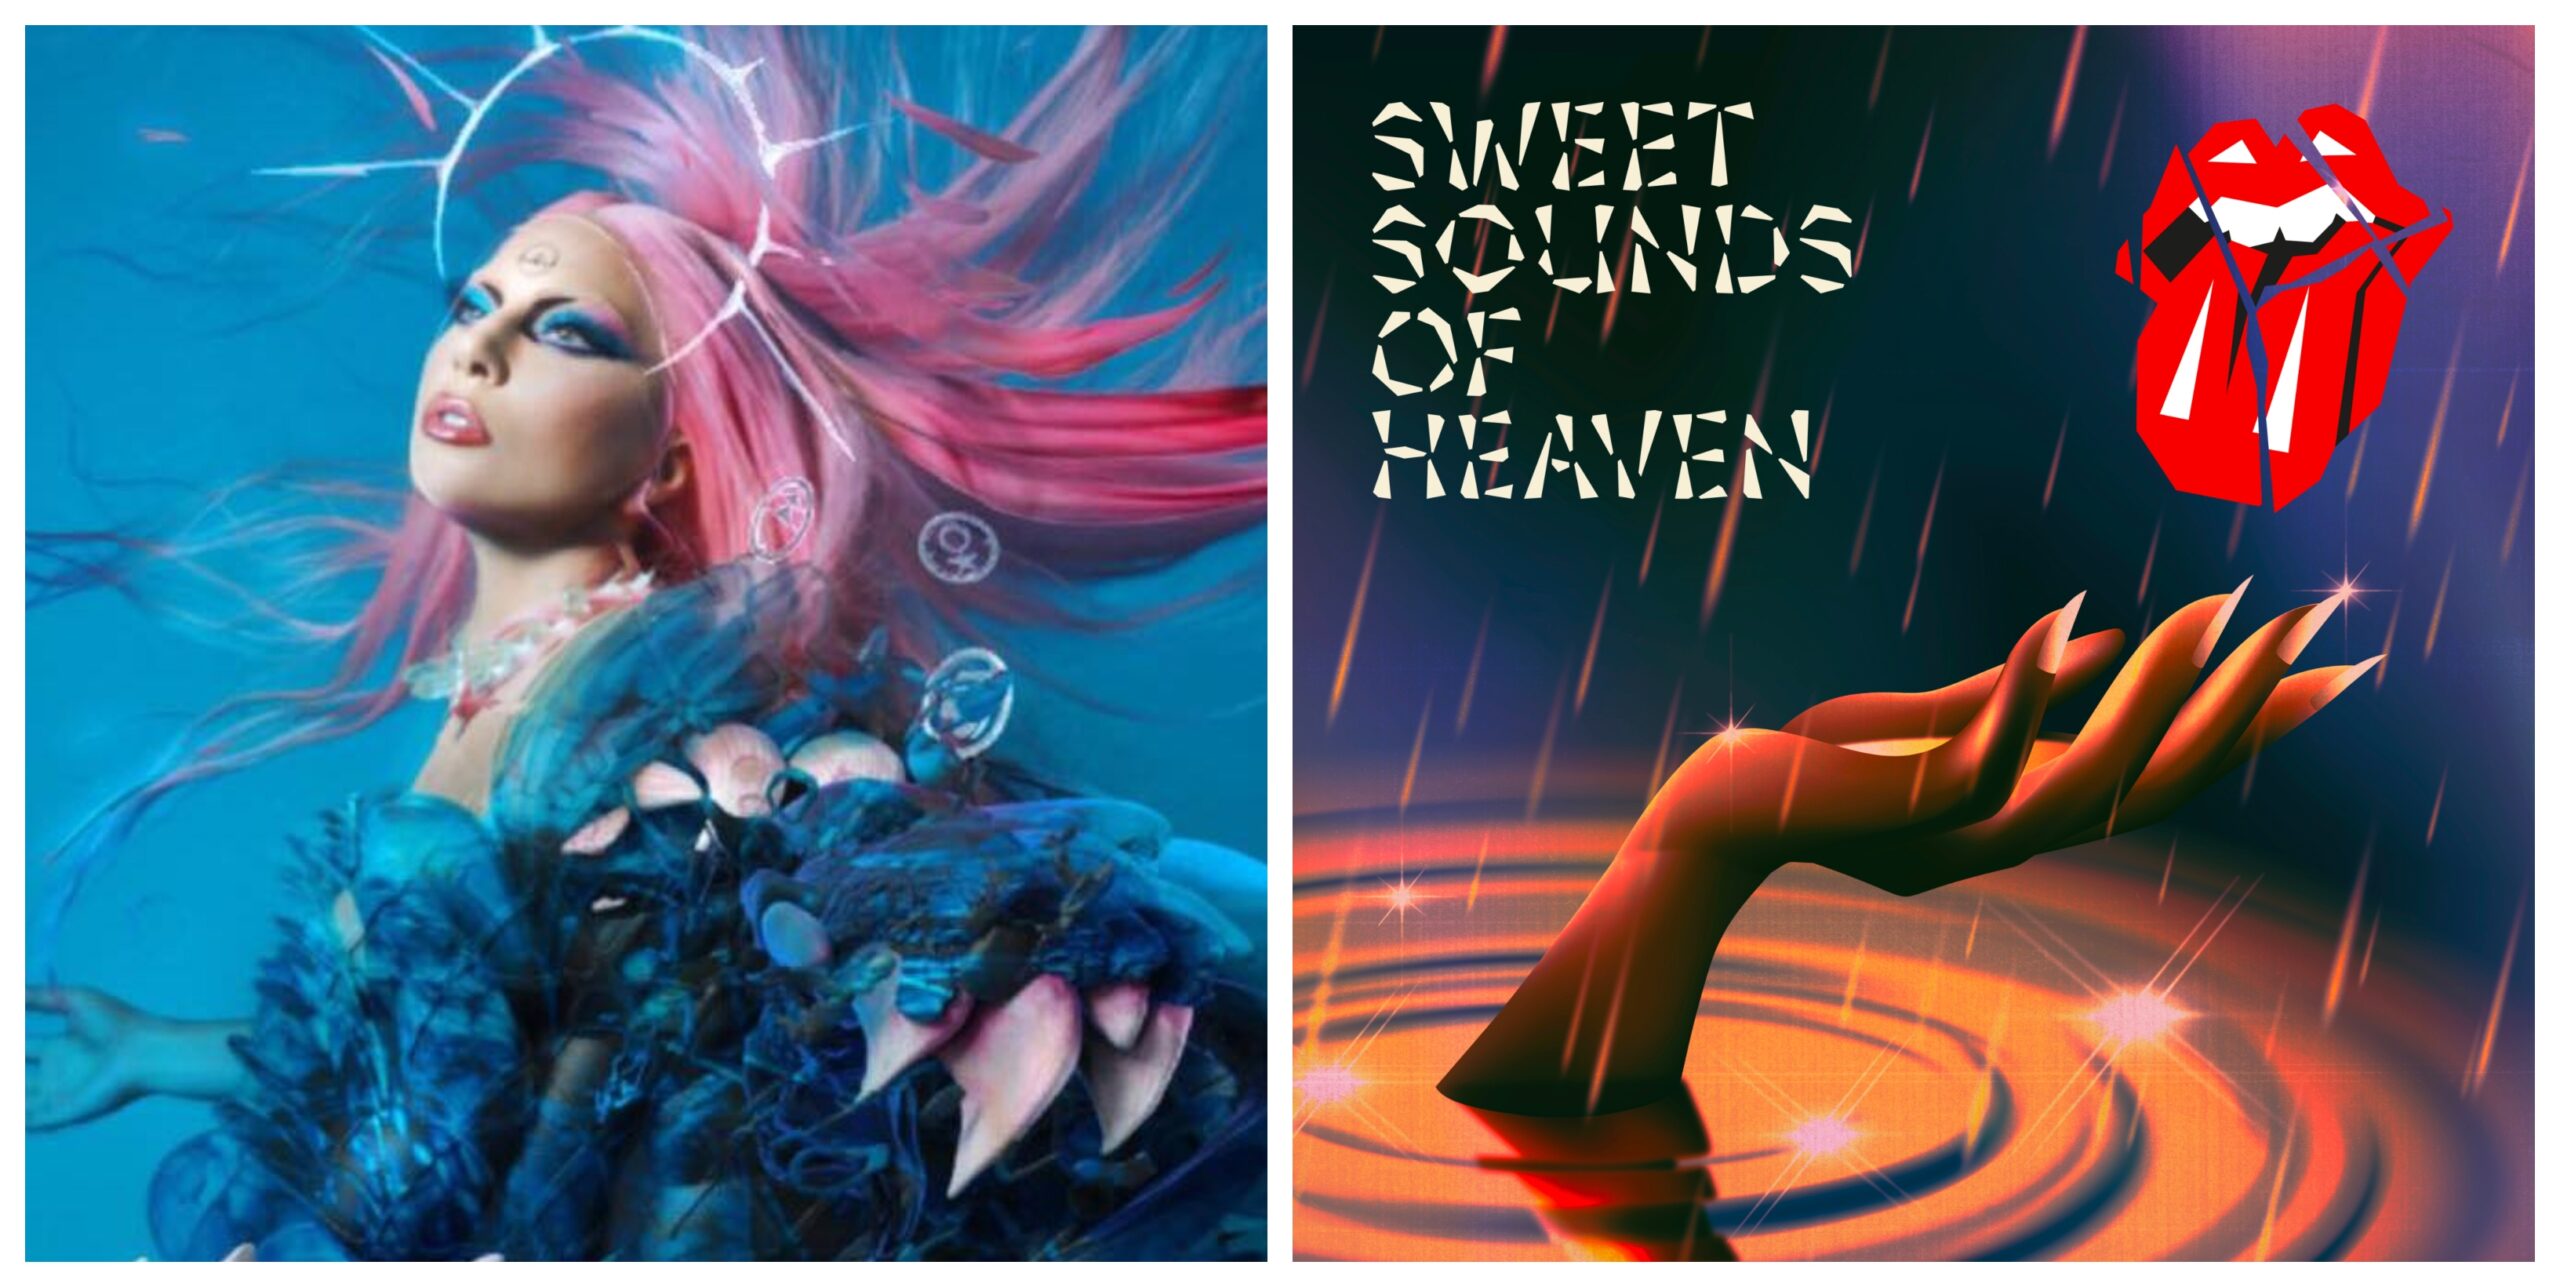 The Rolling Stones & Lady Gaga – Sweet Sounds of Heaven Lyrics